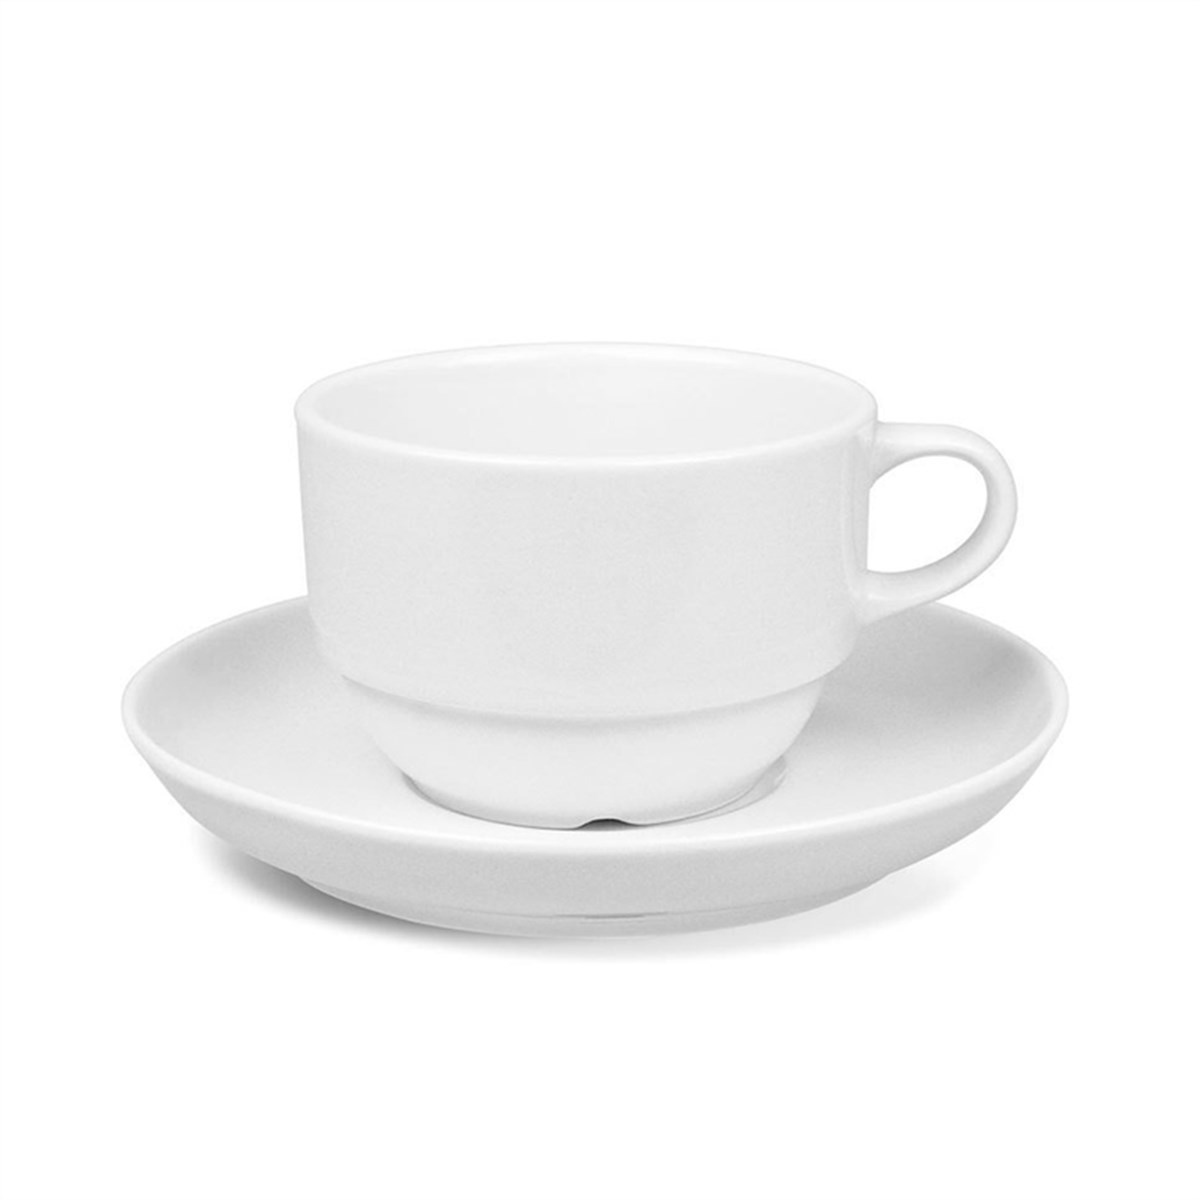 Güral Porselen Çay Nescafe Fincan Takımı 12li 230cc (1. Kalite)